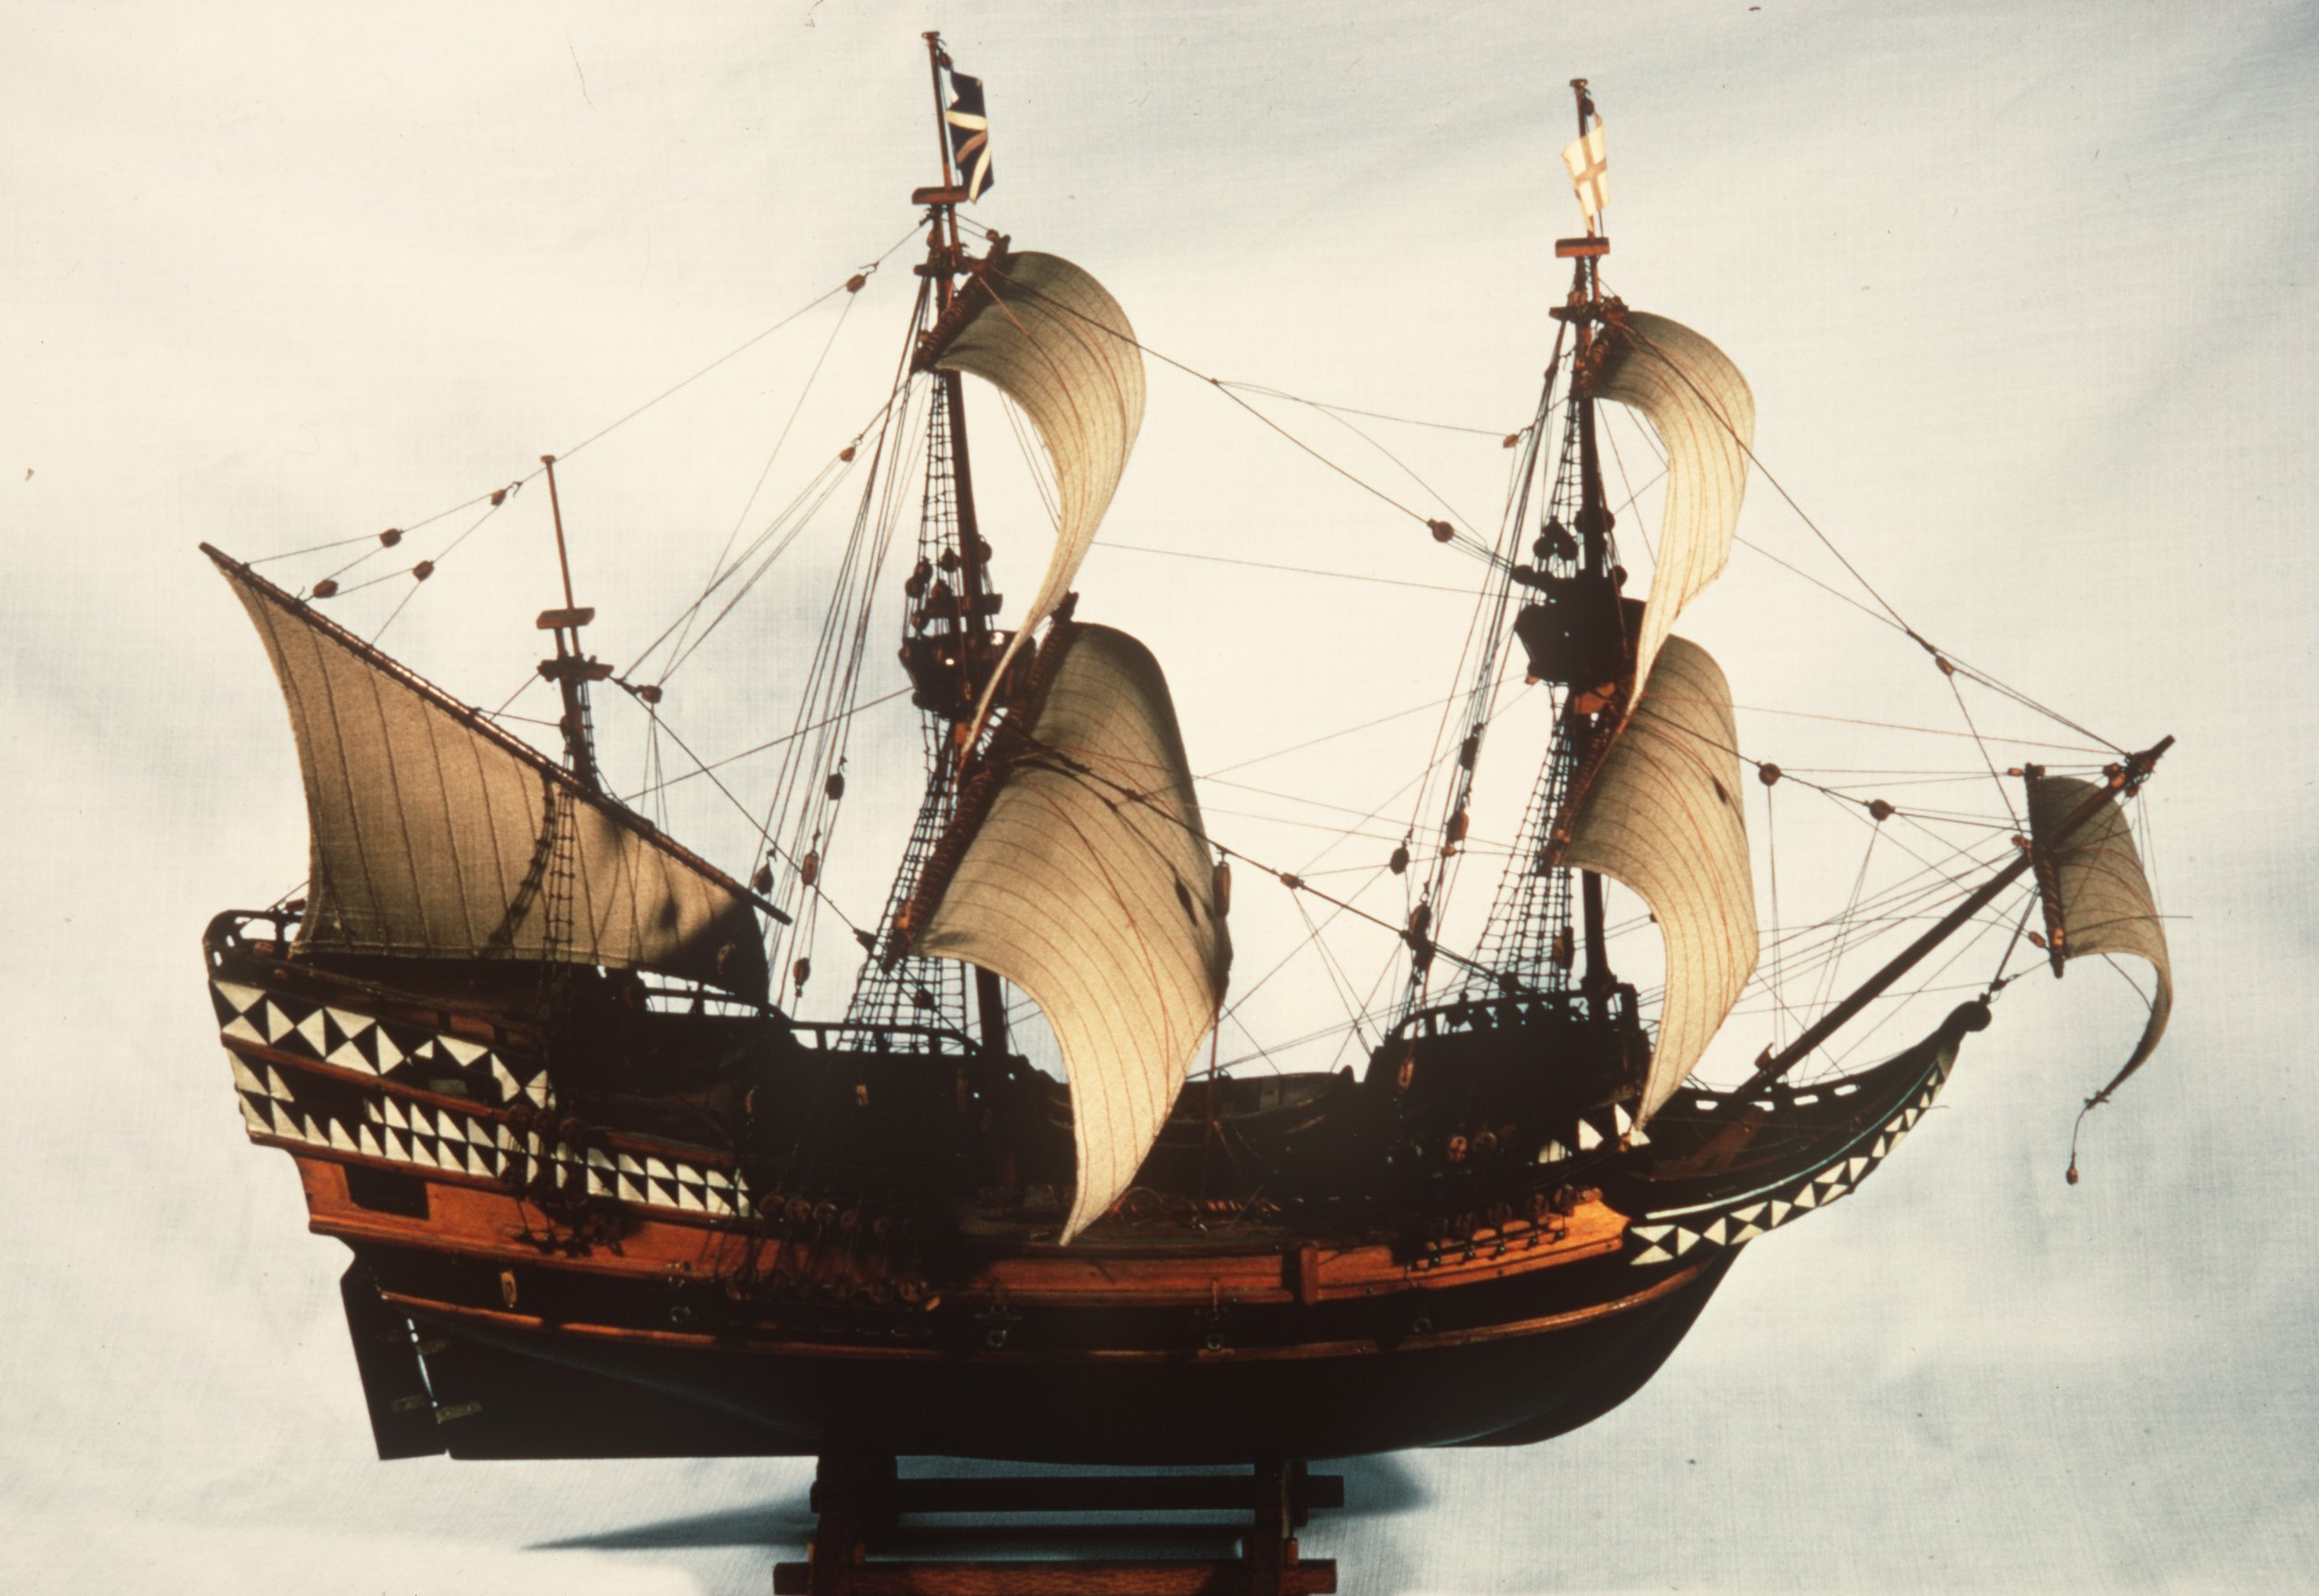 Ship model, the "Mayflower", 1620 galleon.